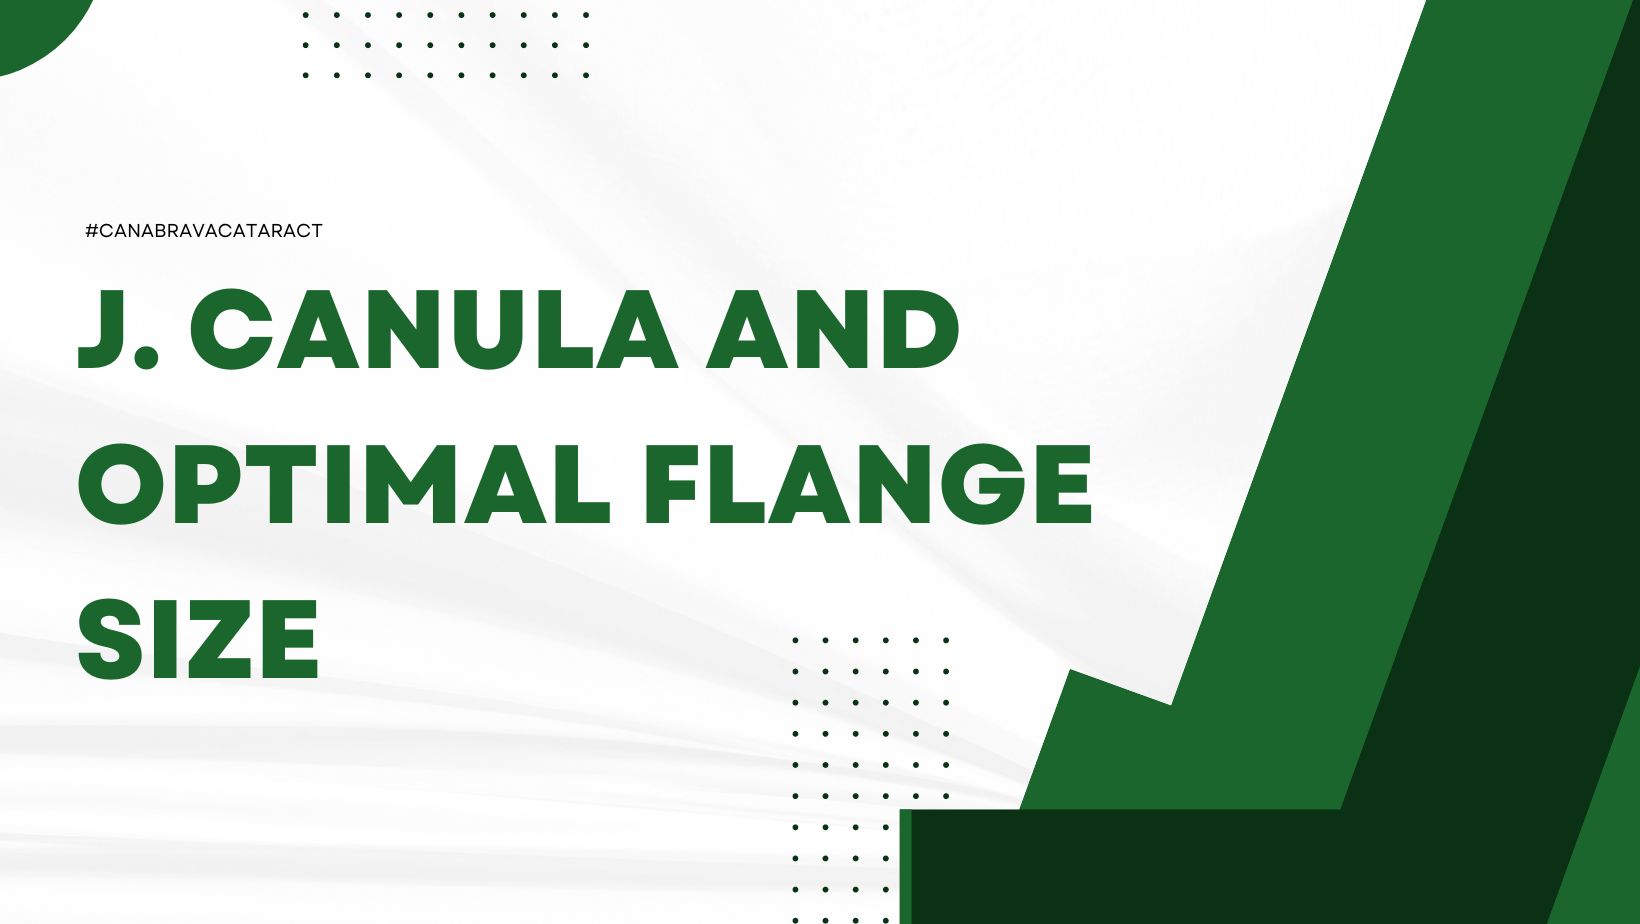 J. Canula and Optimal Flange Size